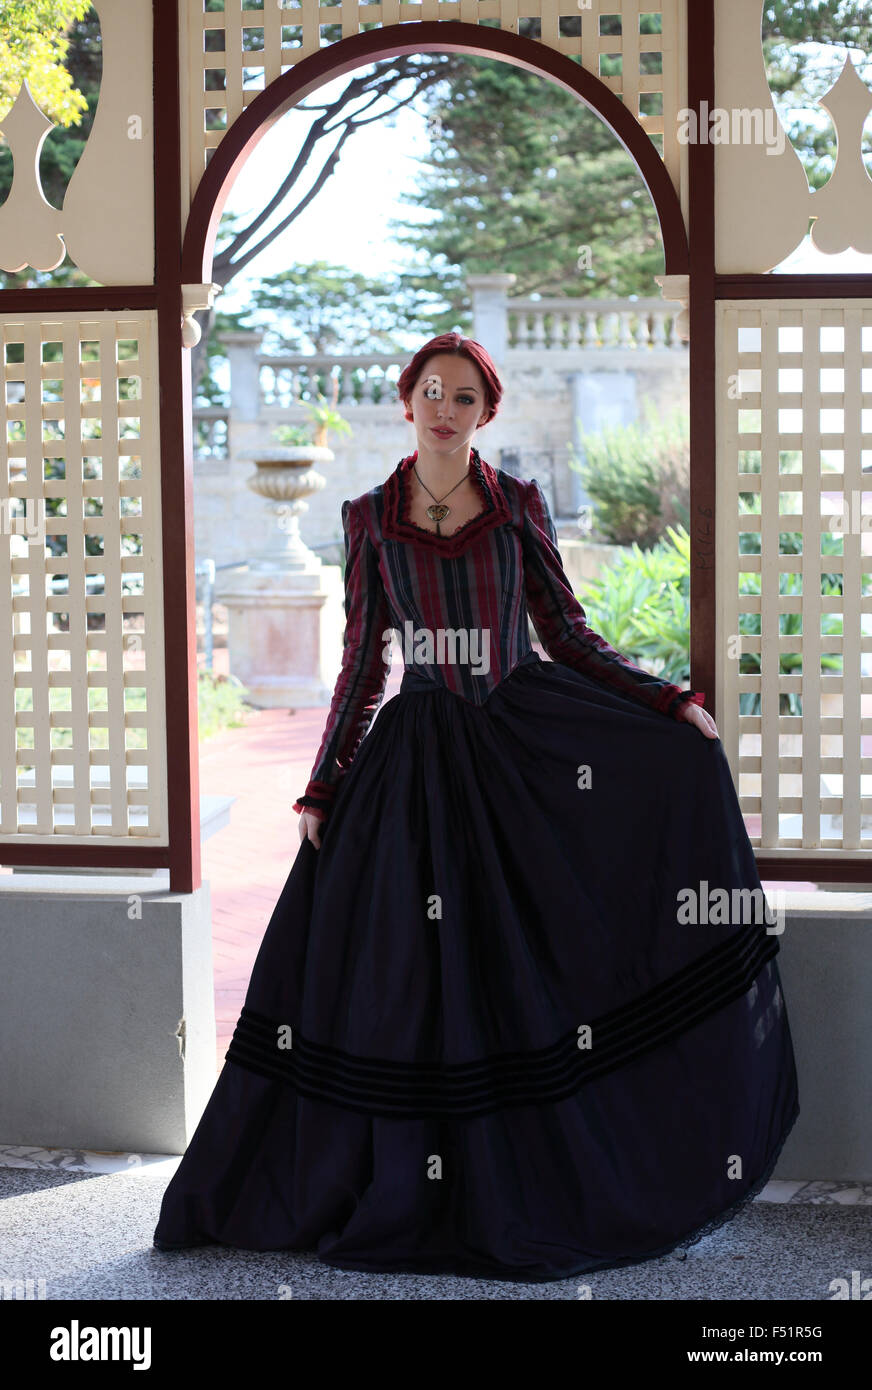 Retrato de una hermosa niña de cabello rojo vestidos de inspiración gótica  victoriana. ropa o vampiro romance histórico era Fotografía de stock - Alamy